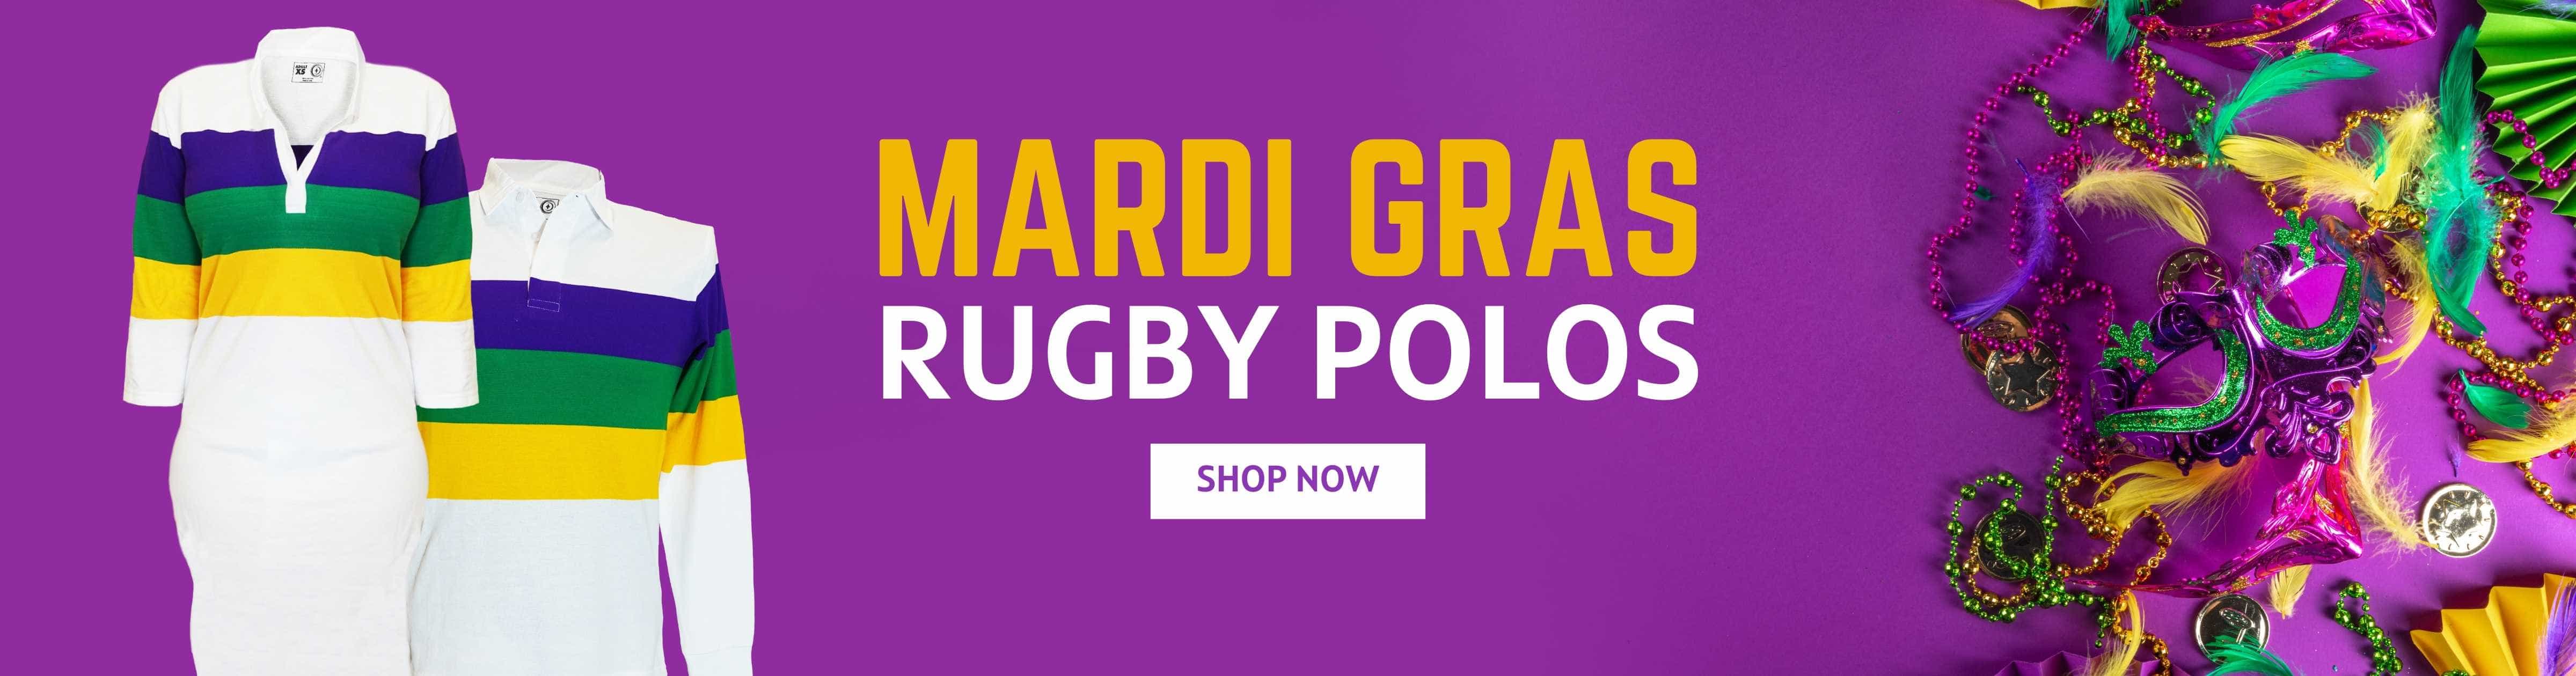 Mardi Gras Rugby Polos - Mardi Gras Apparel